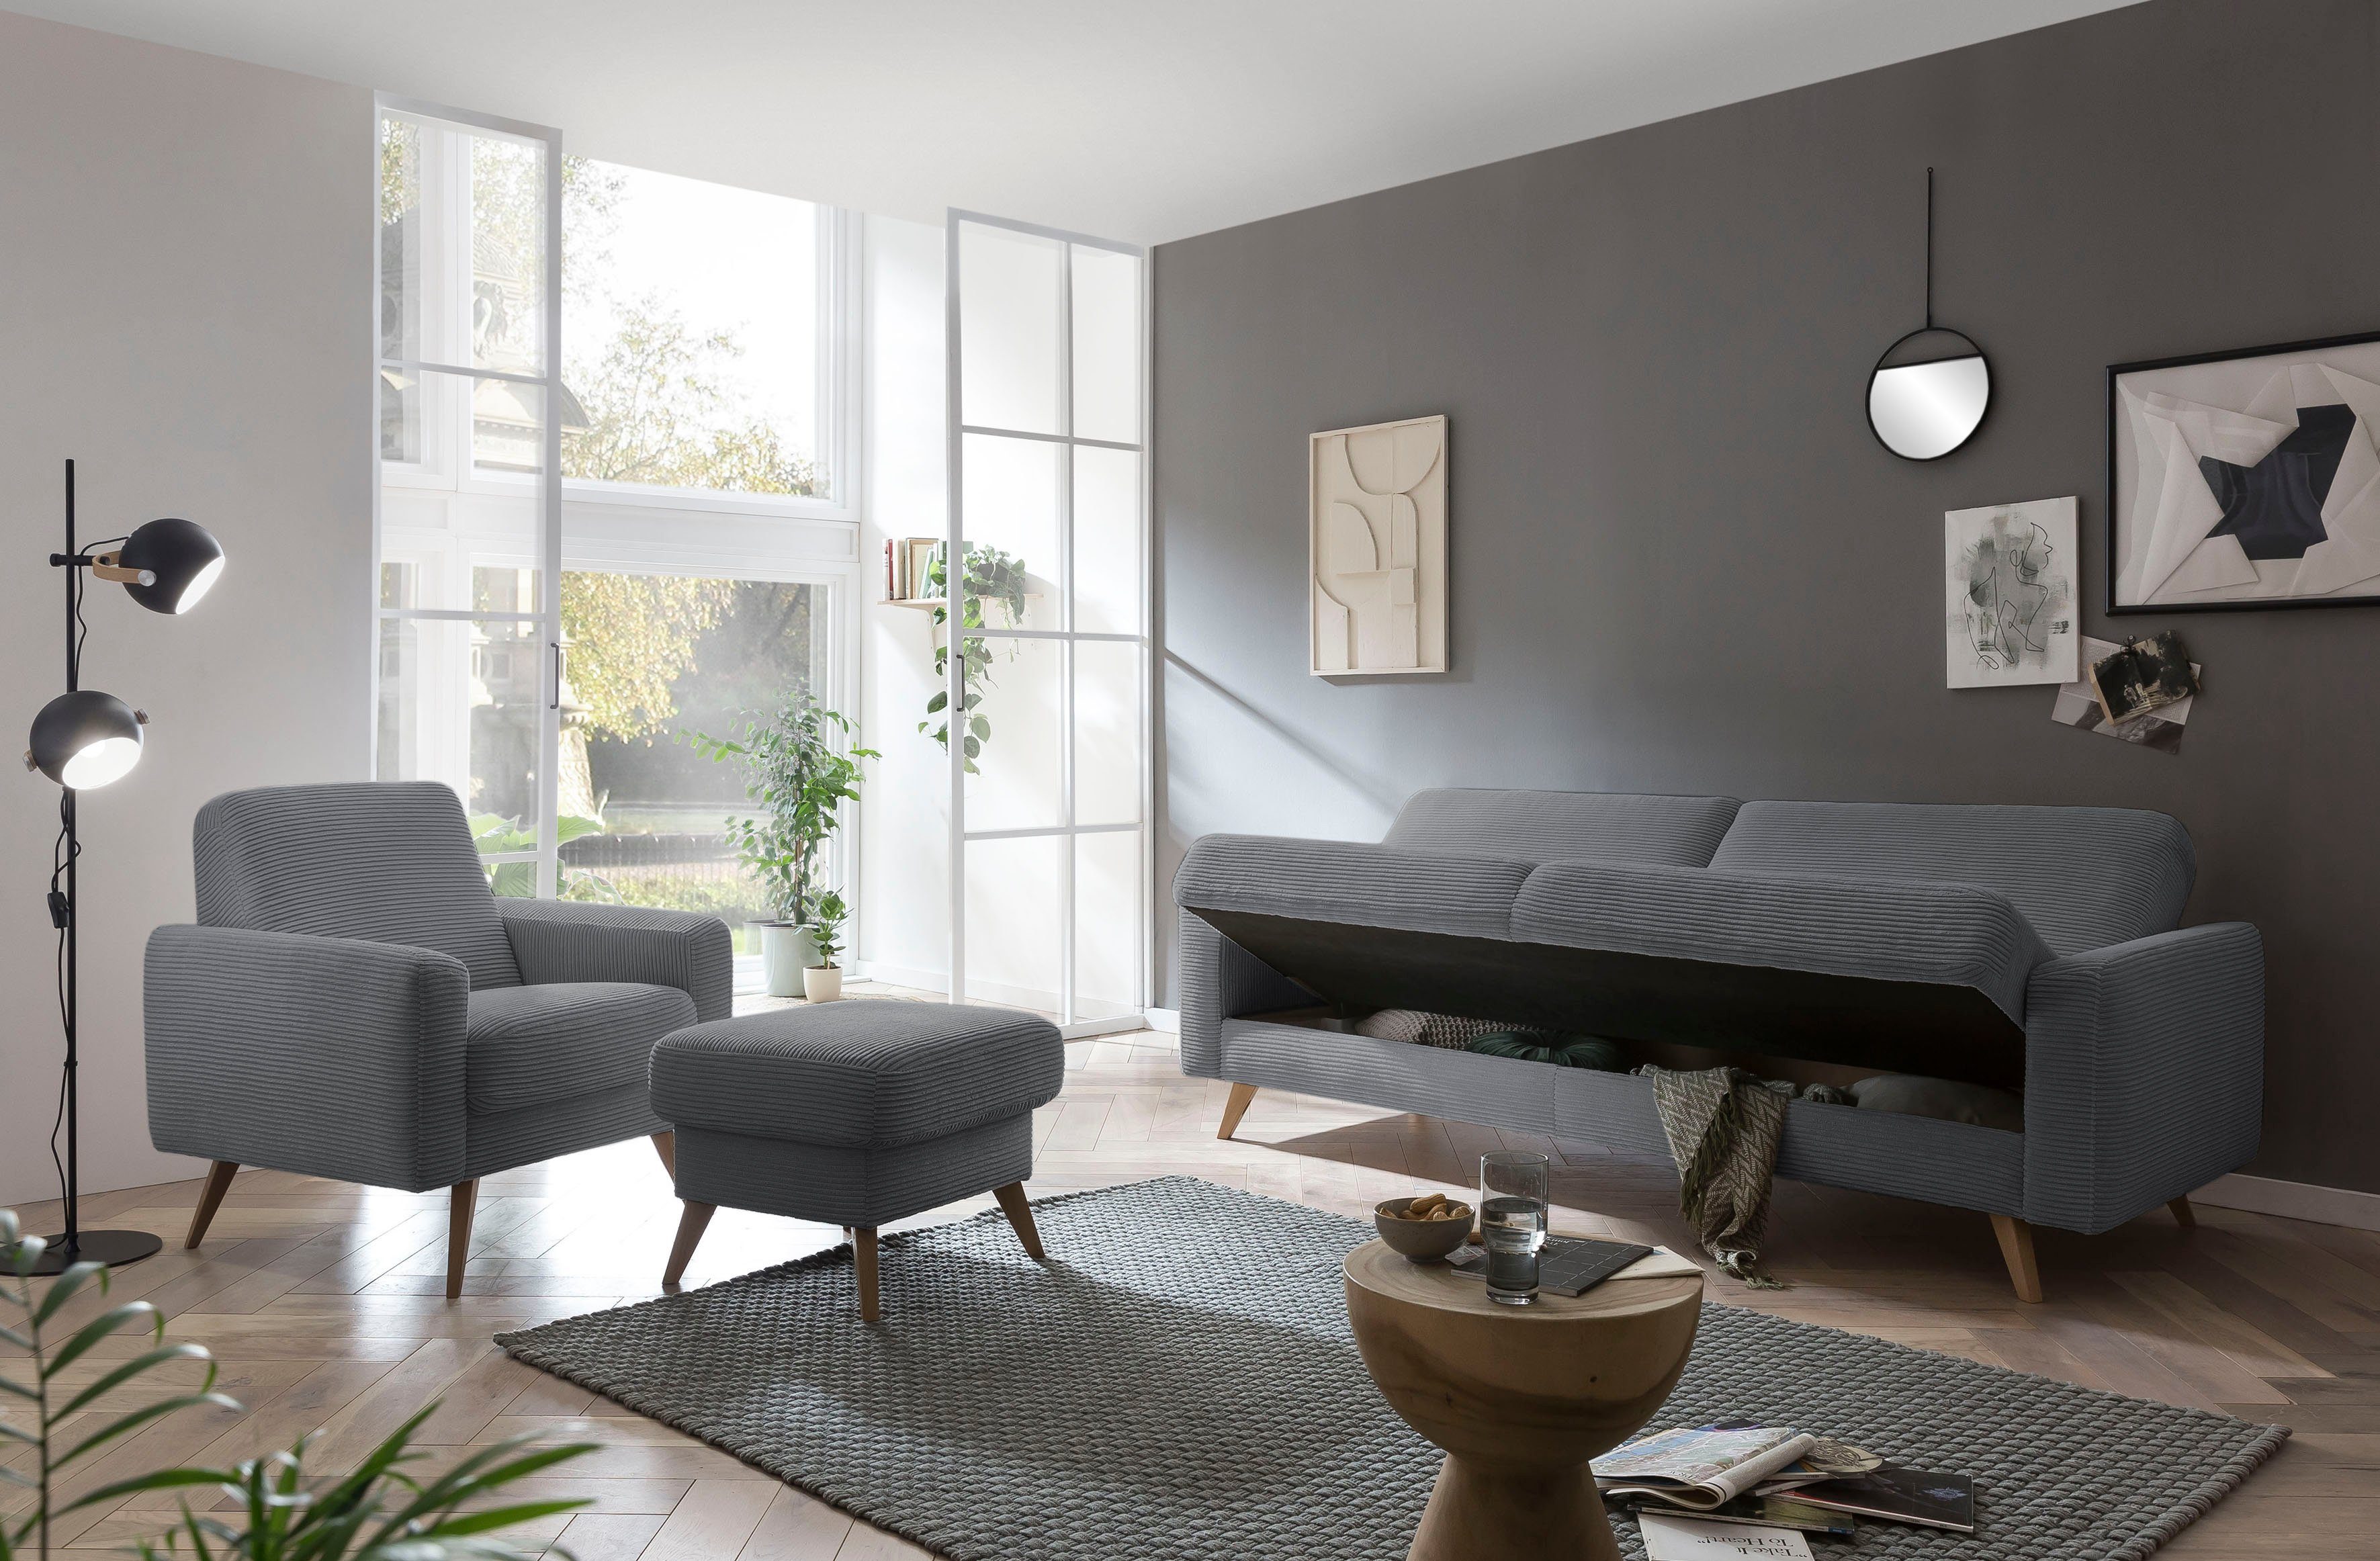 Inklusive Bettkasten Bettfunktion exxpo fashion sofa grey 3-Sitzer - und Samso,